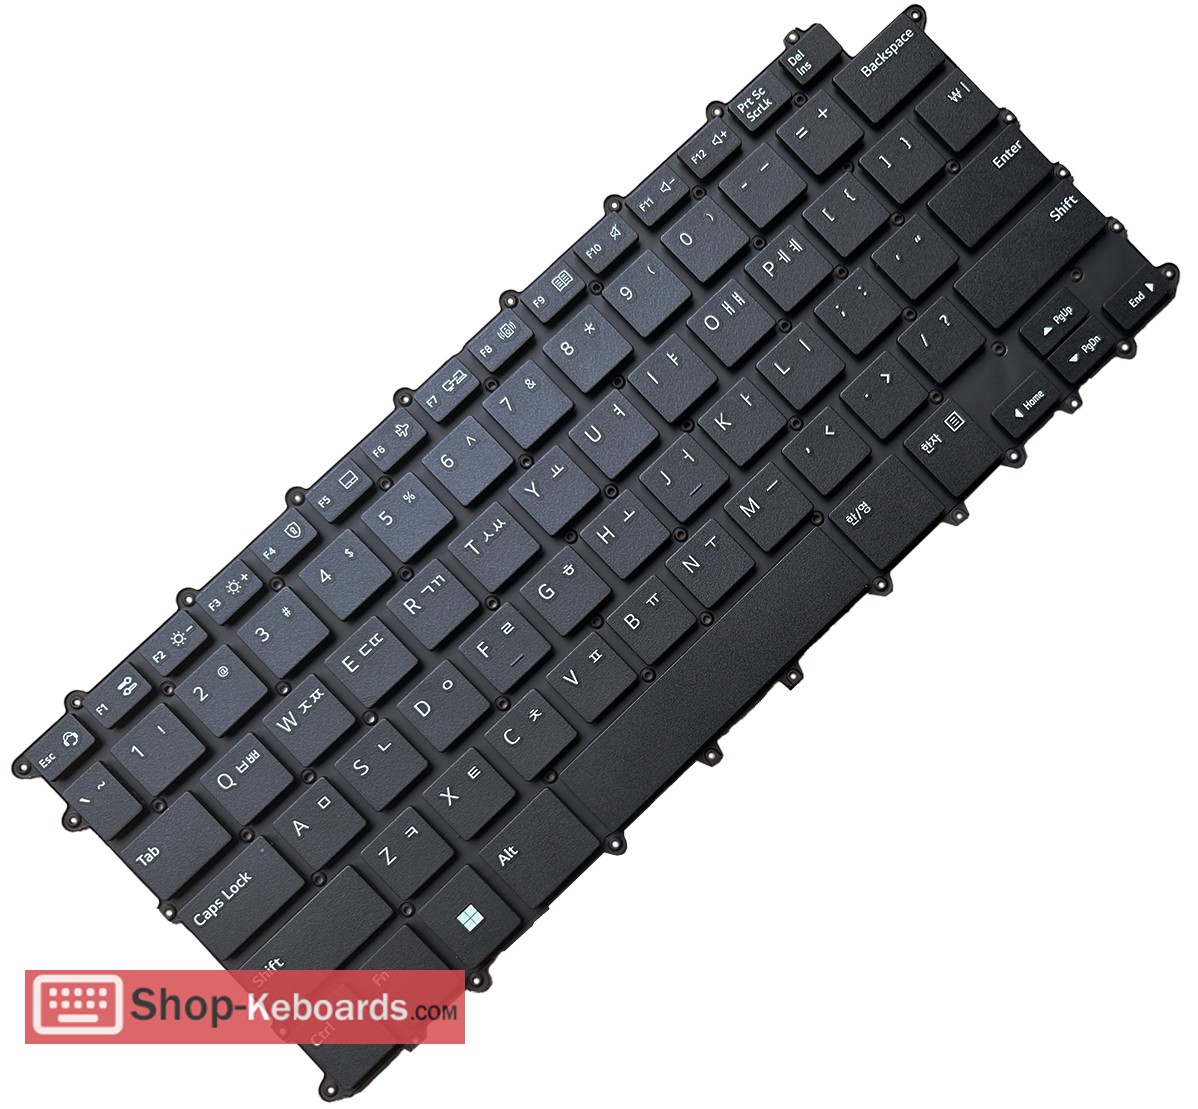 LG 14U70Q-N.APC5U1  Keyboard replacement